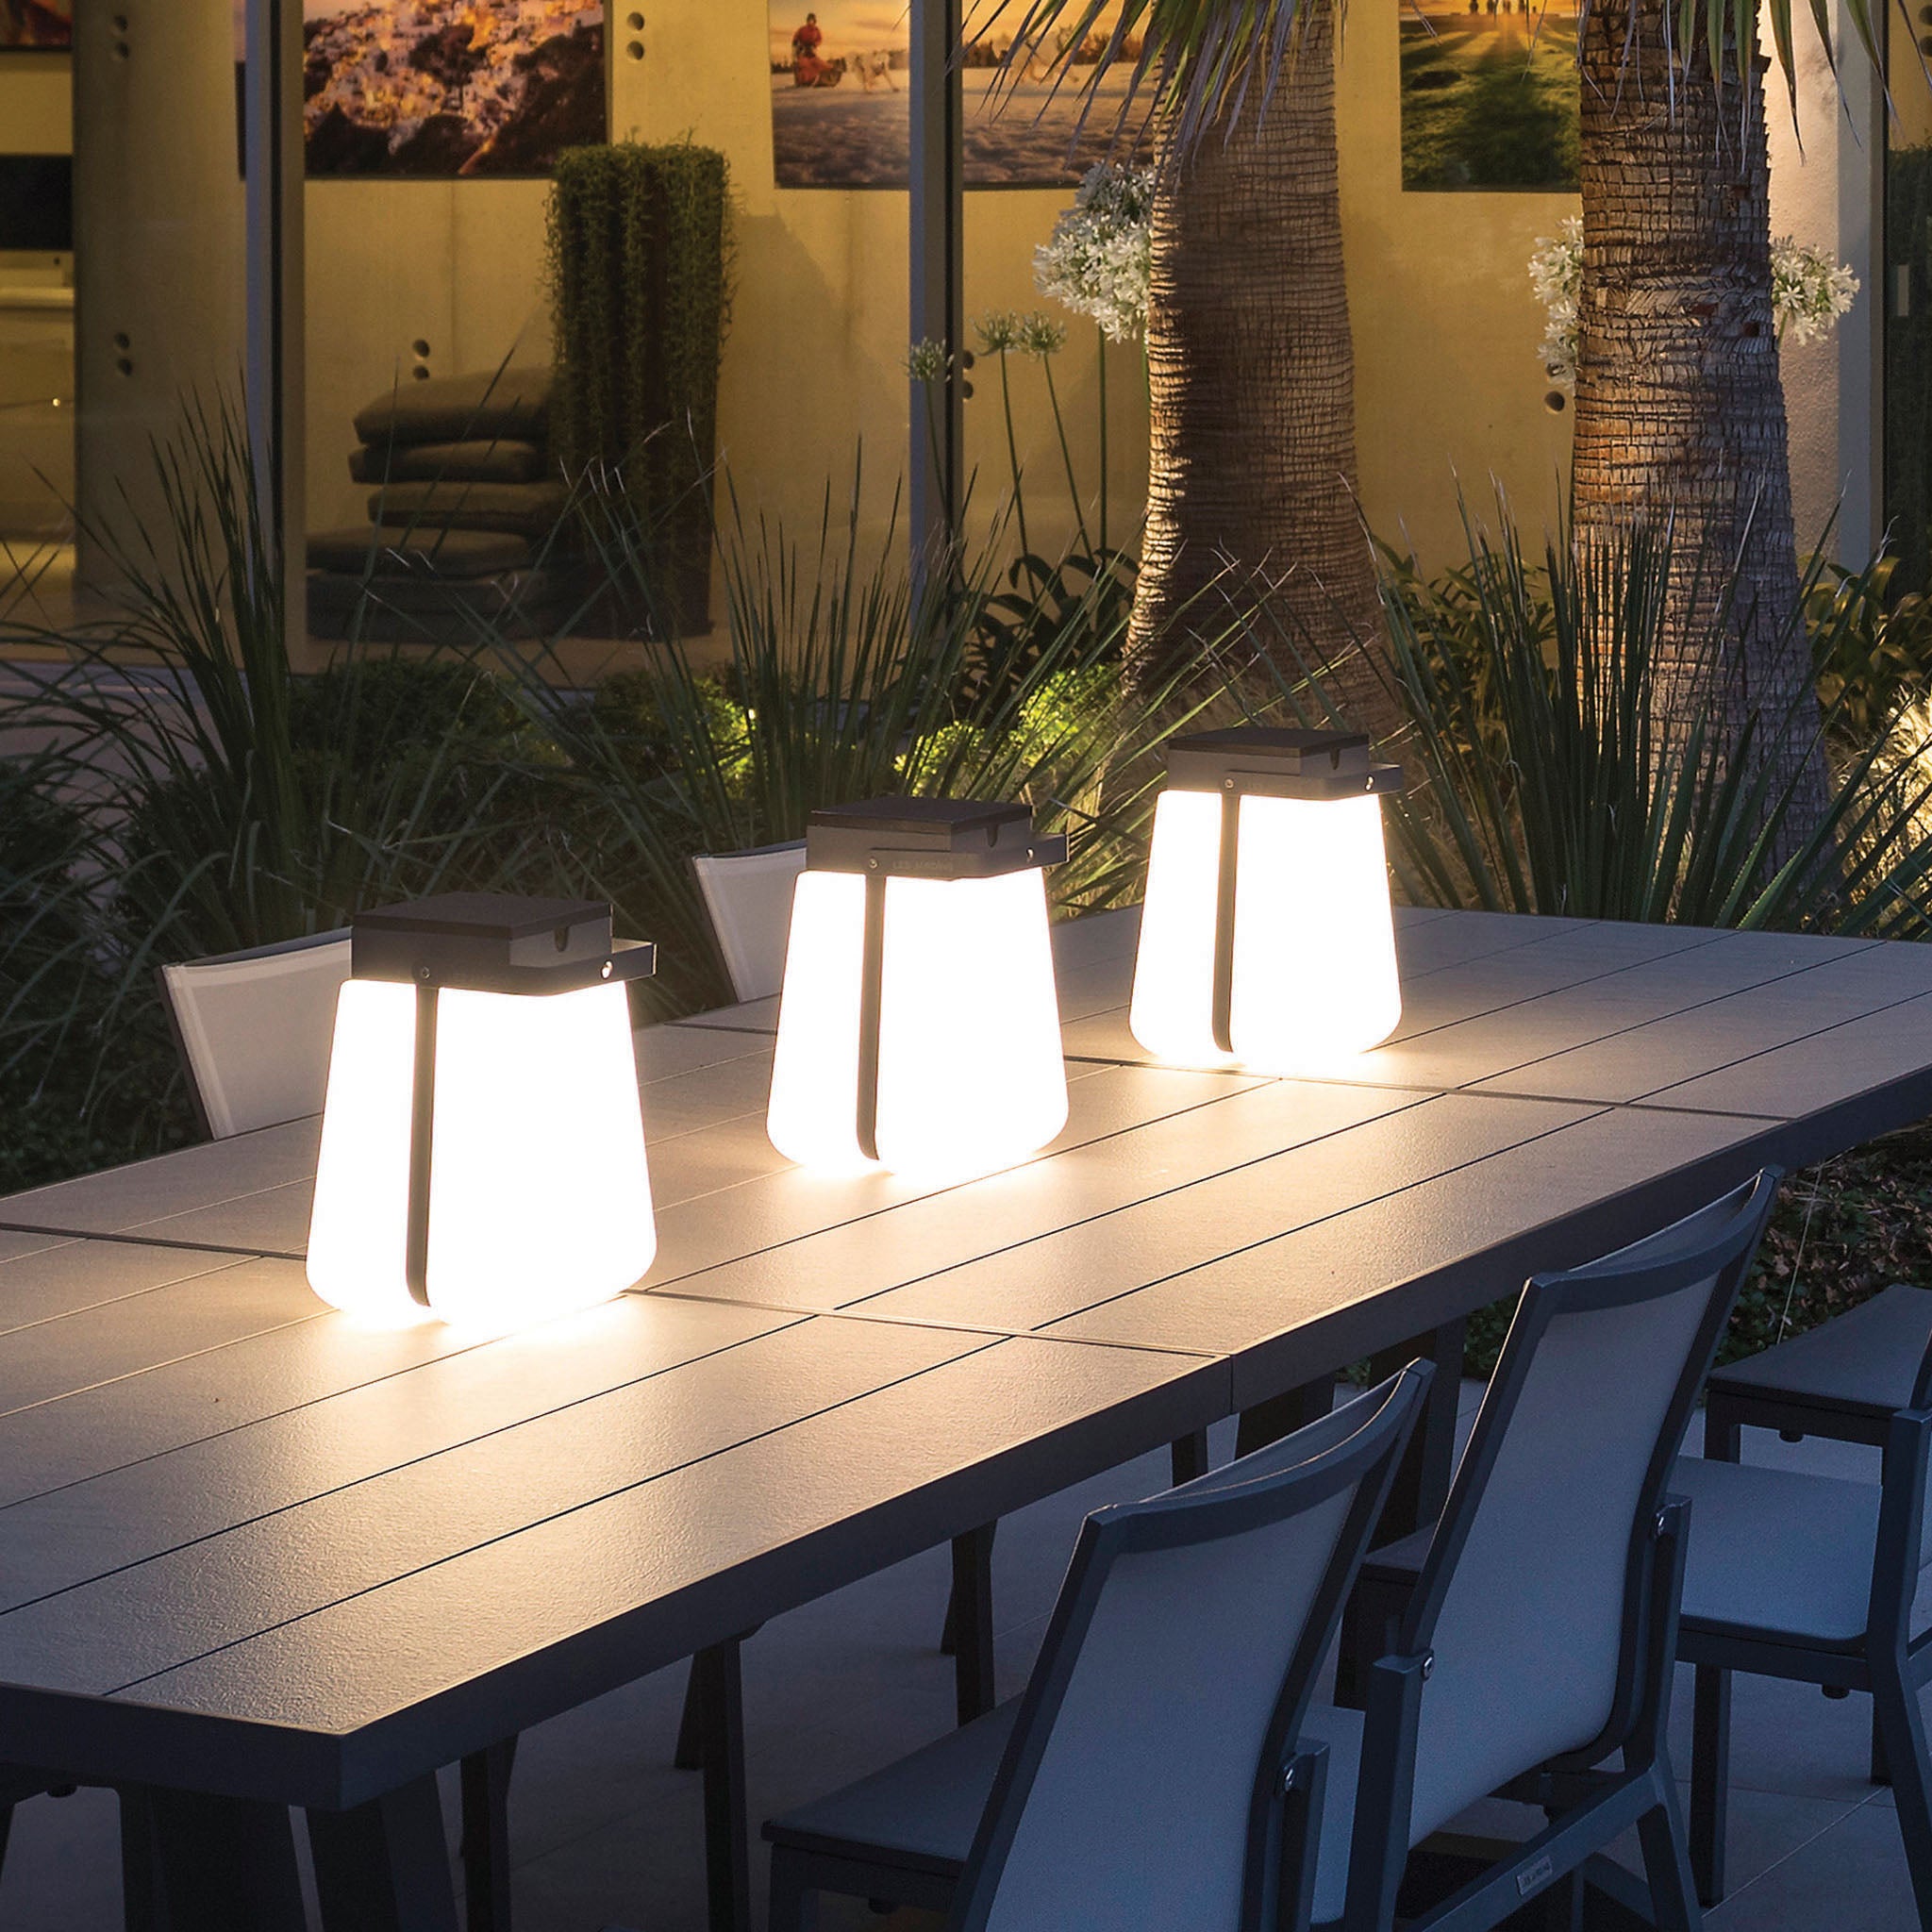 bump solar lantern lighting up outdoor dining table and garden